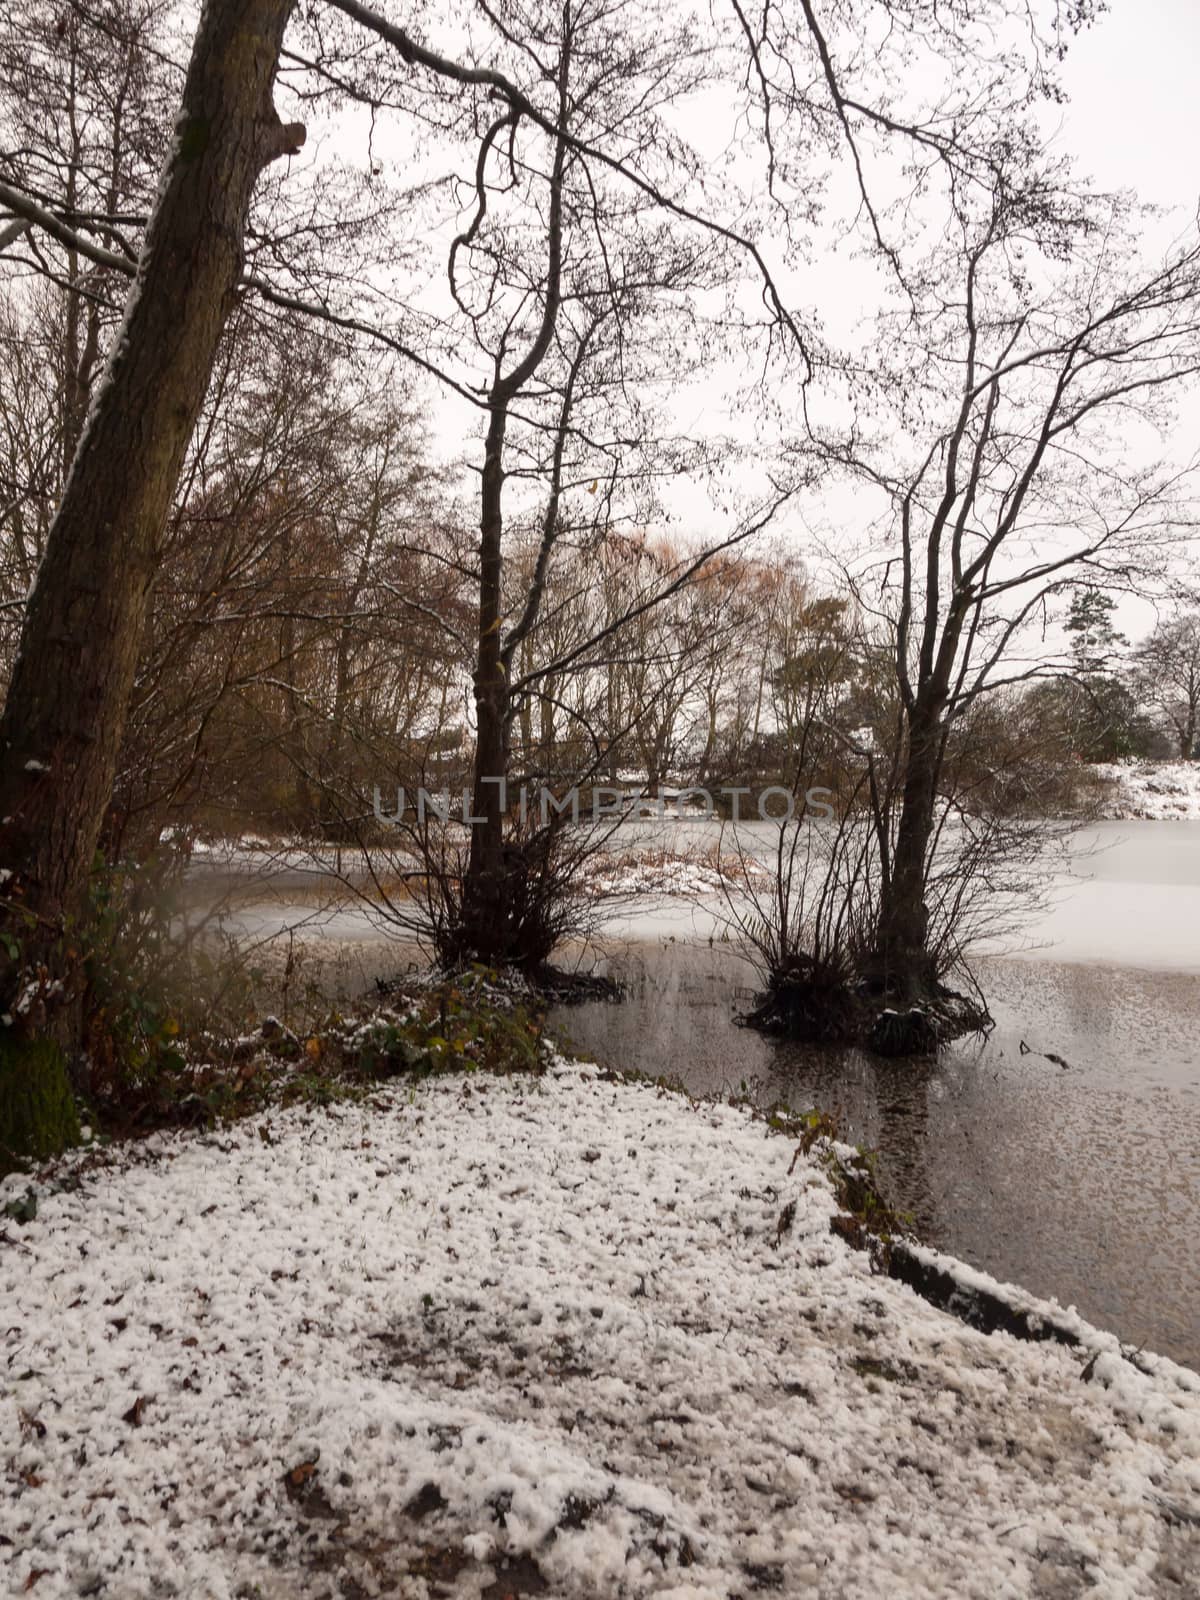 lakeside snow covered trees frozen lake scene winter december; essex; england; uk